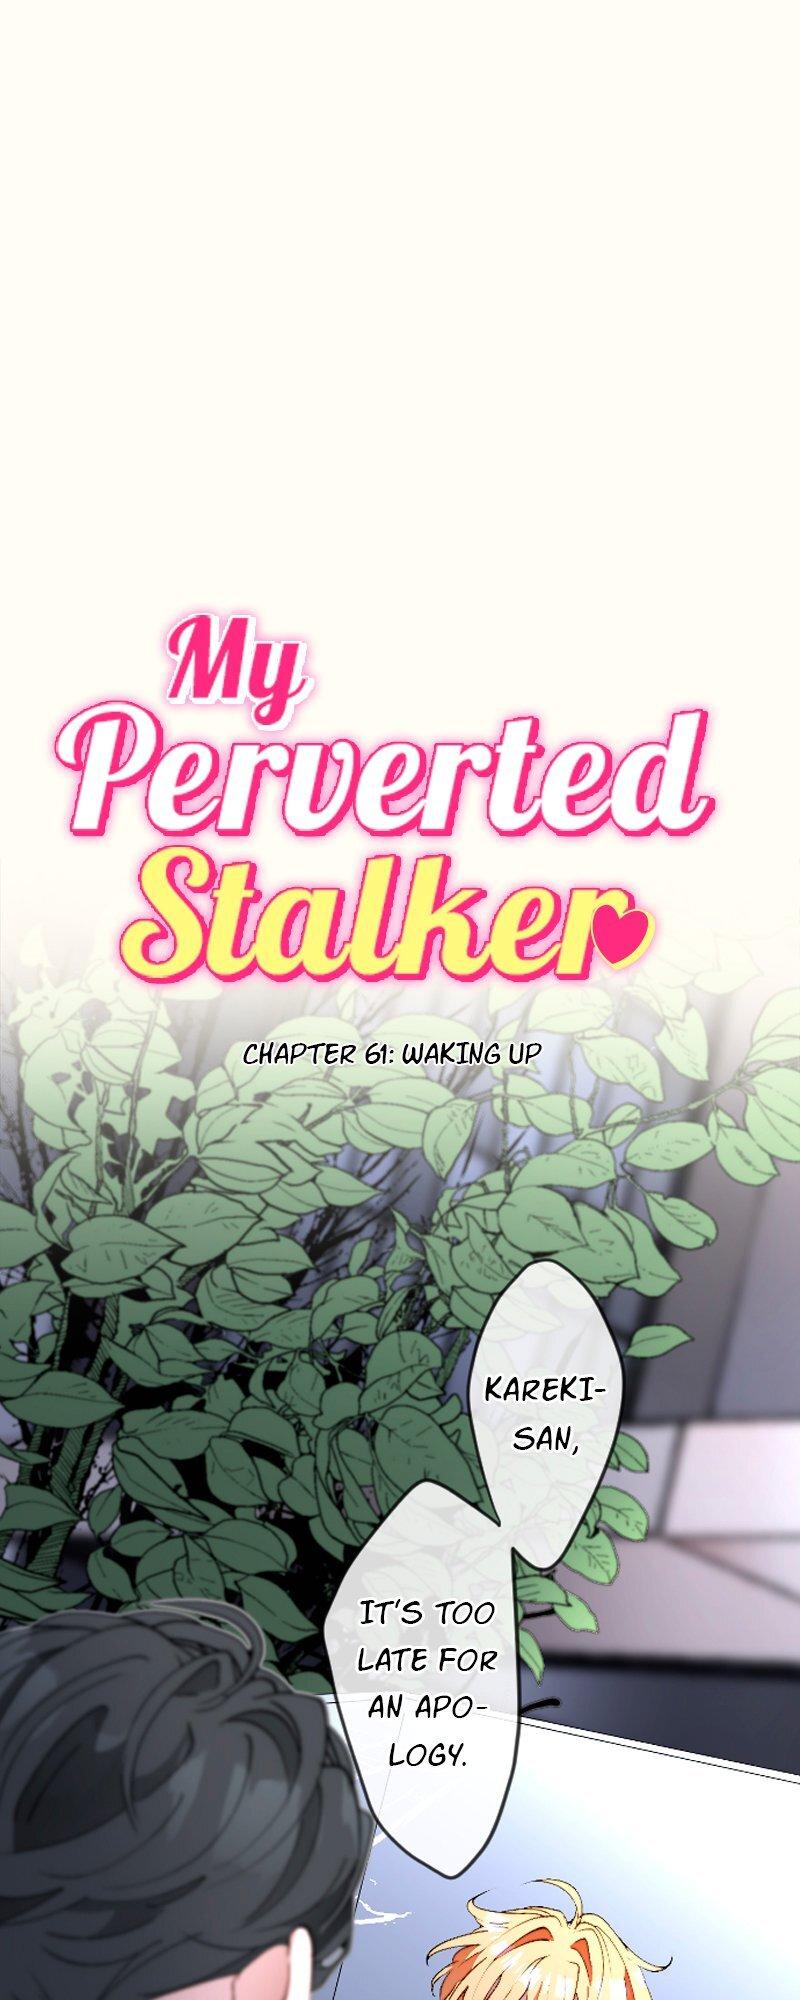 My Perverted Stalker - Page 2